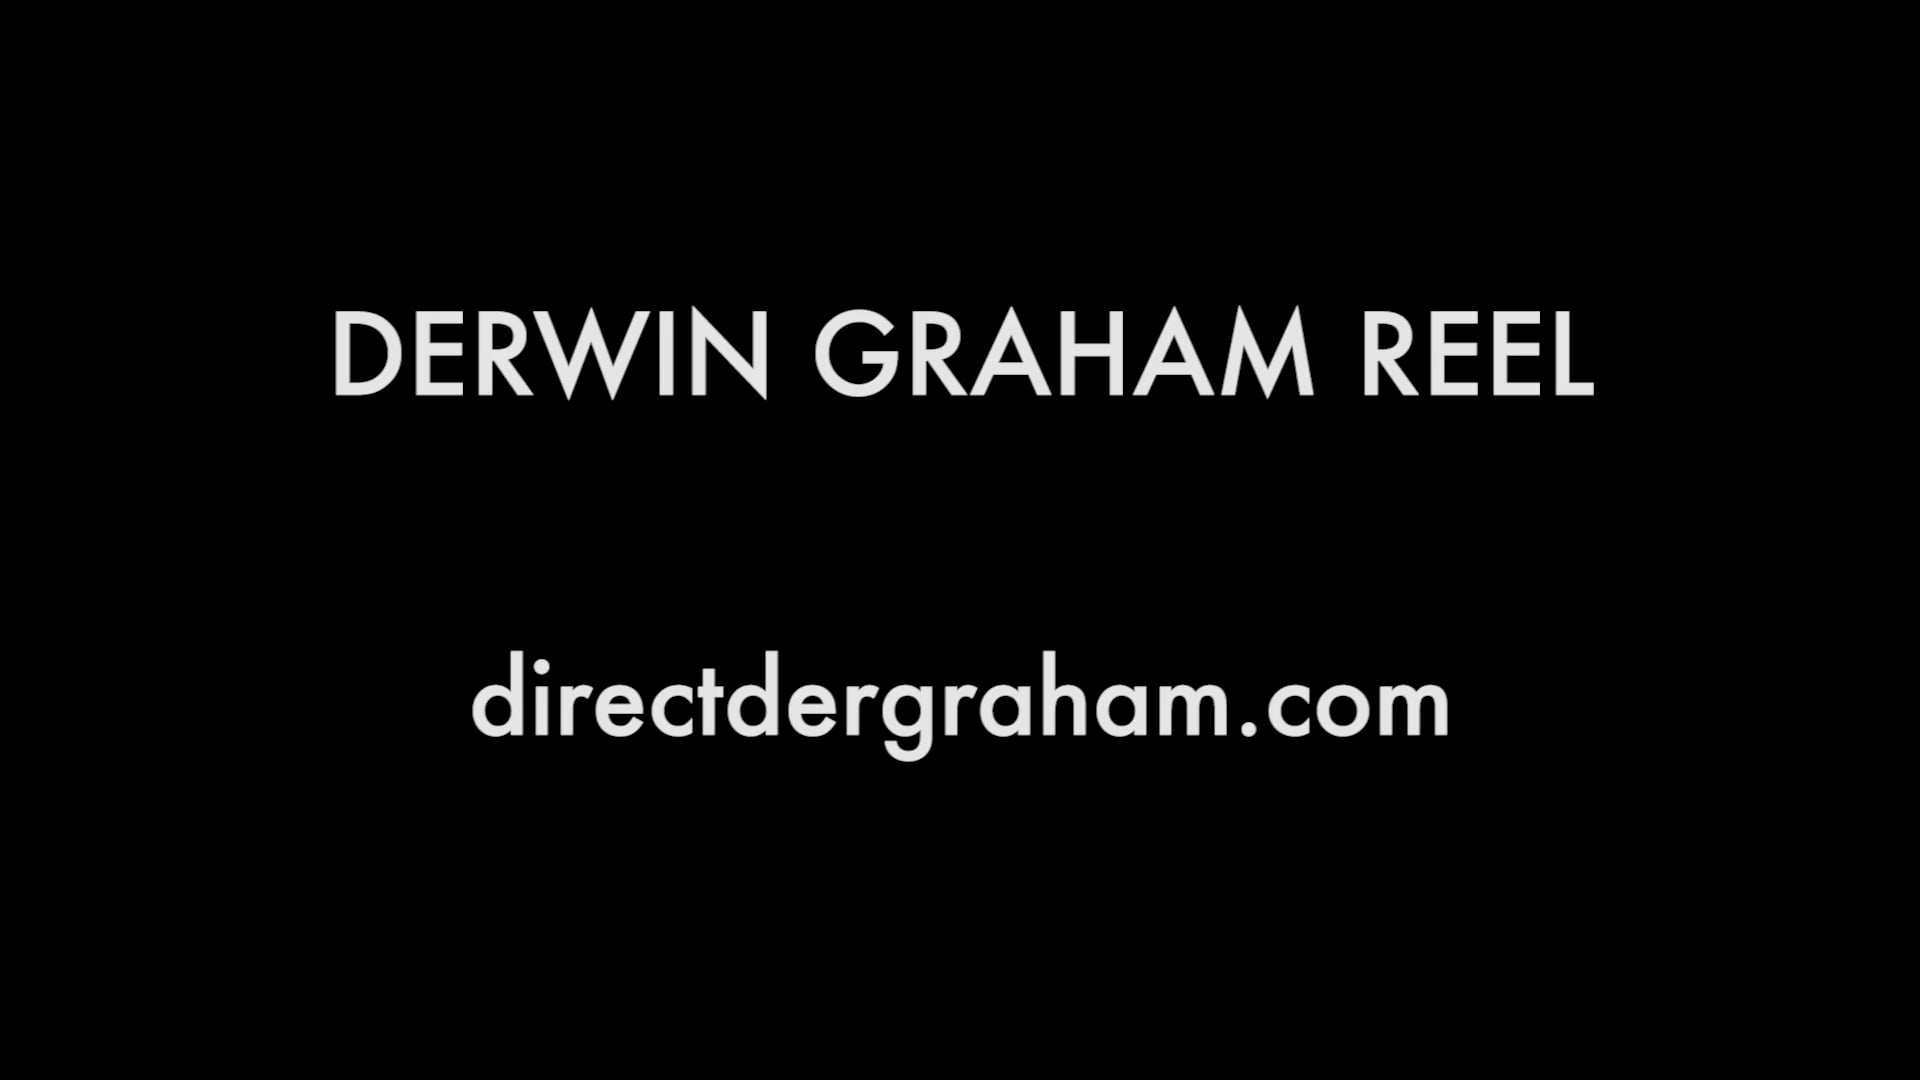 Derwin A. Graham Reel